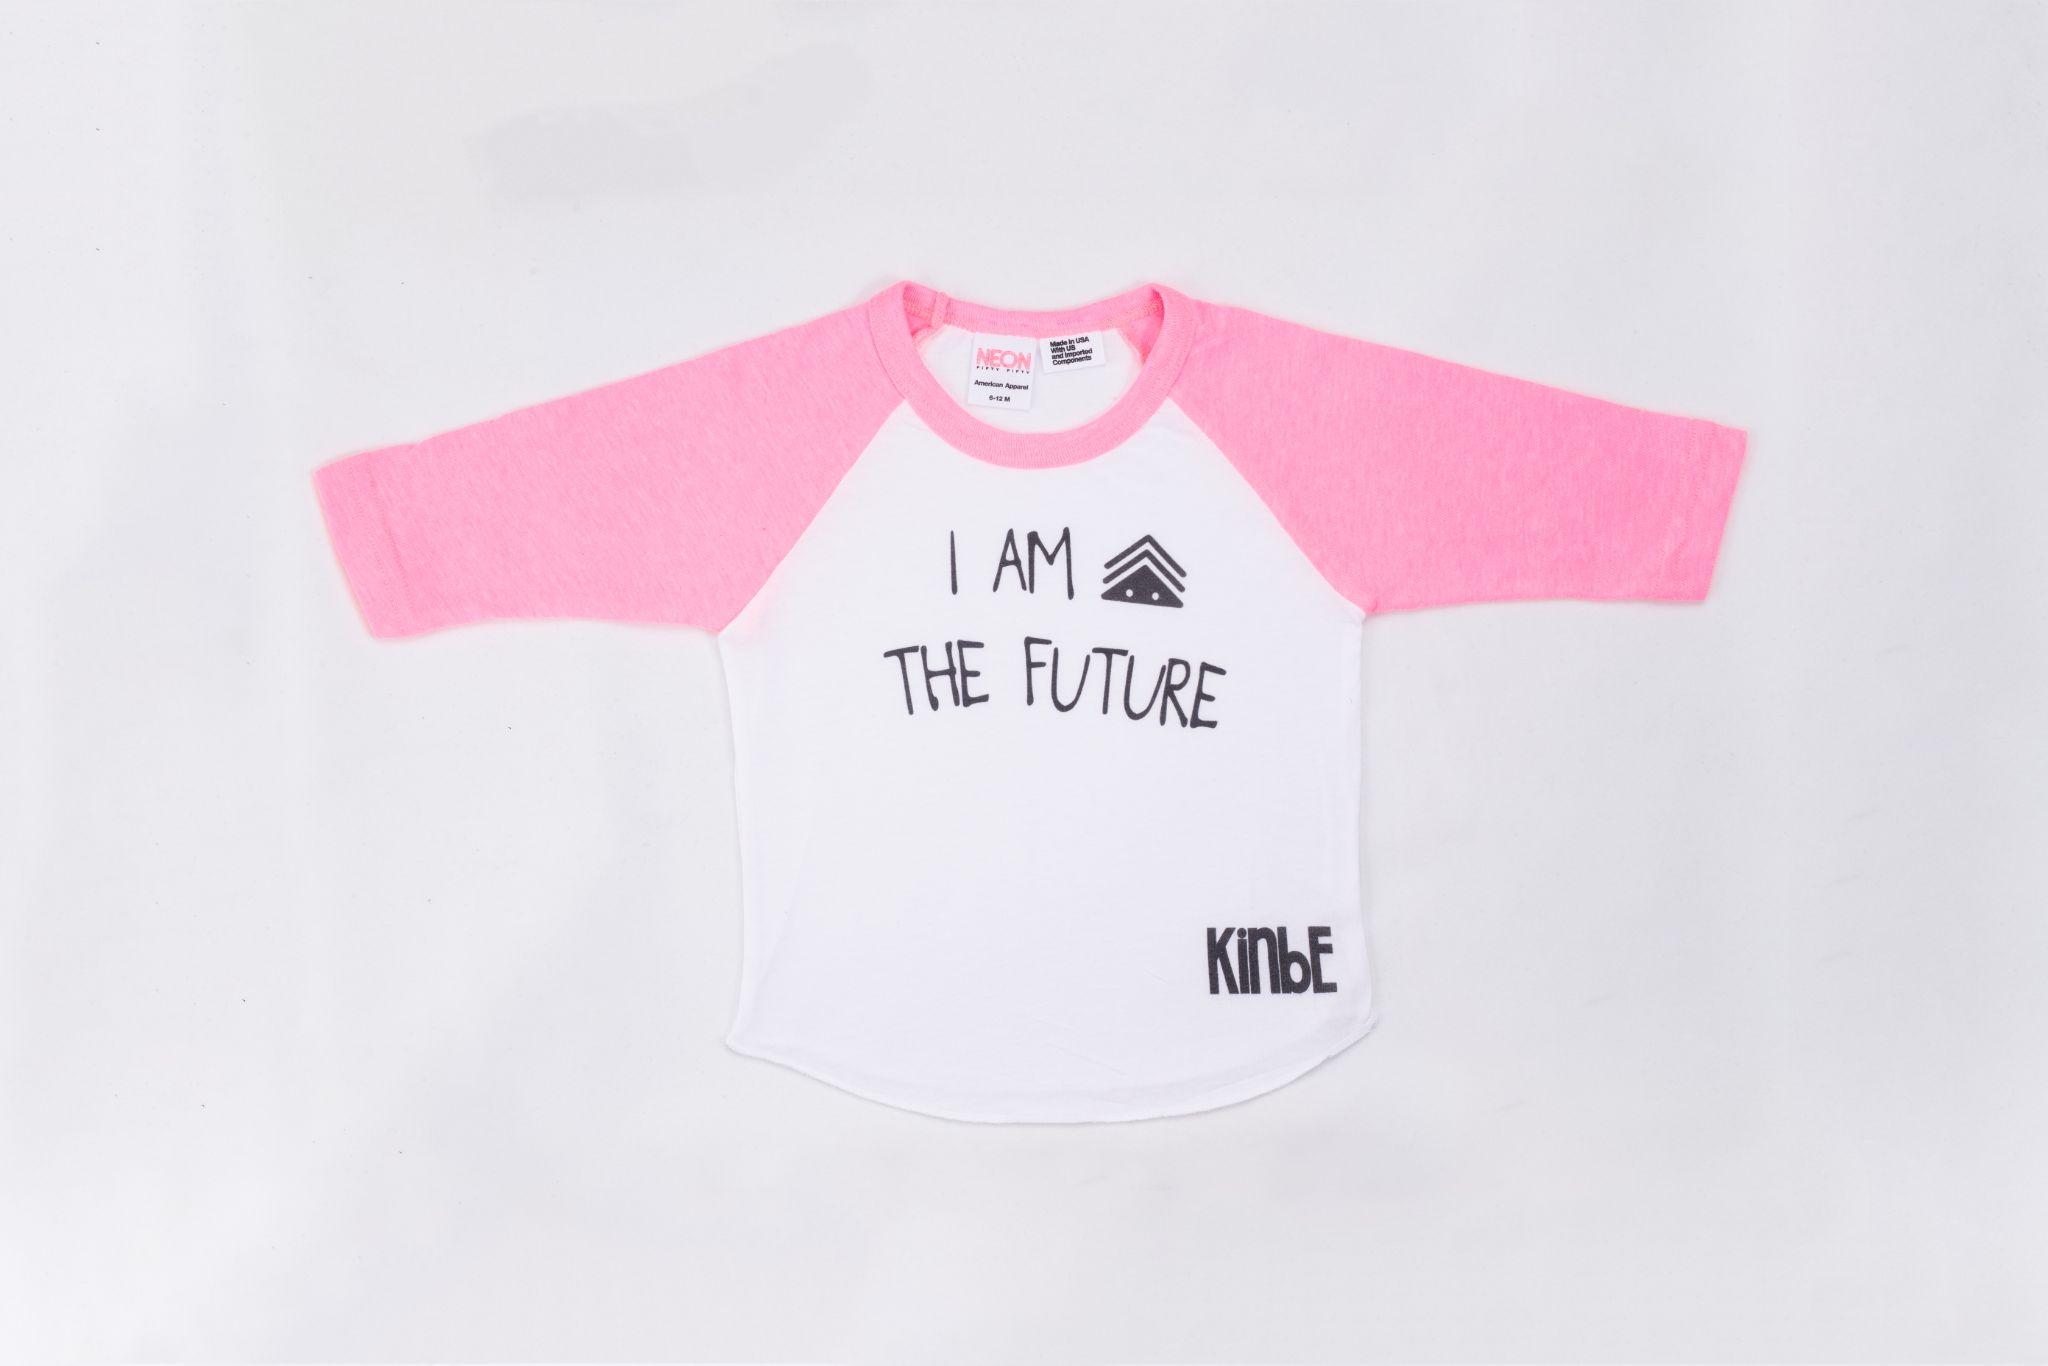 Kinbe Kids Product Pink and white I Am The Future shirt on display with Kinbe logo